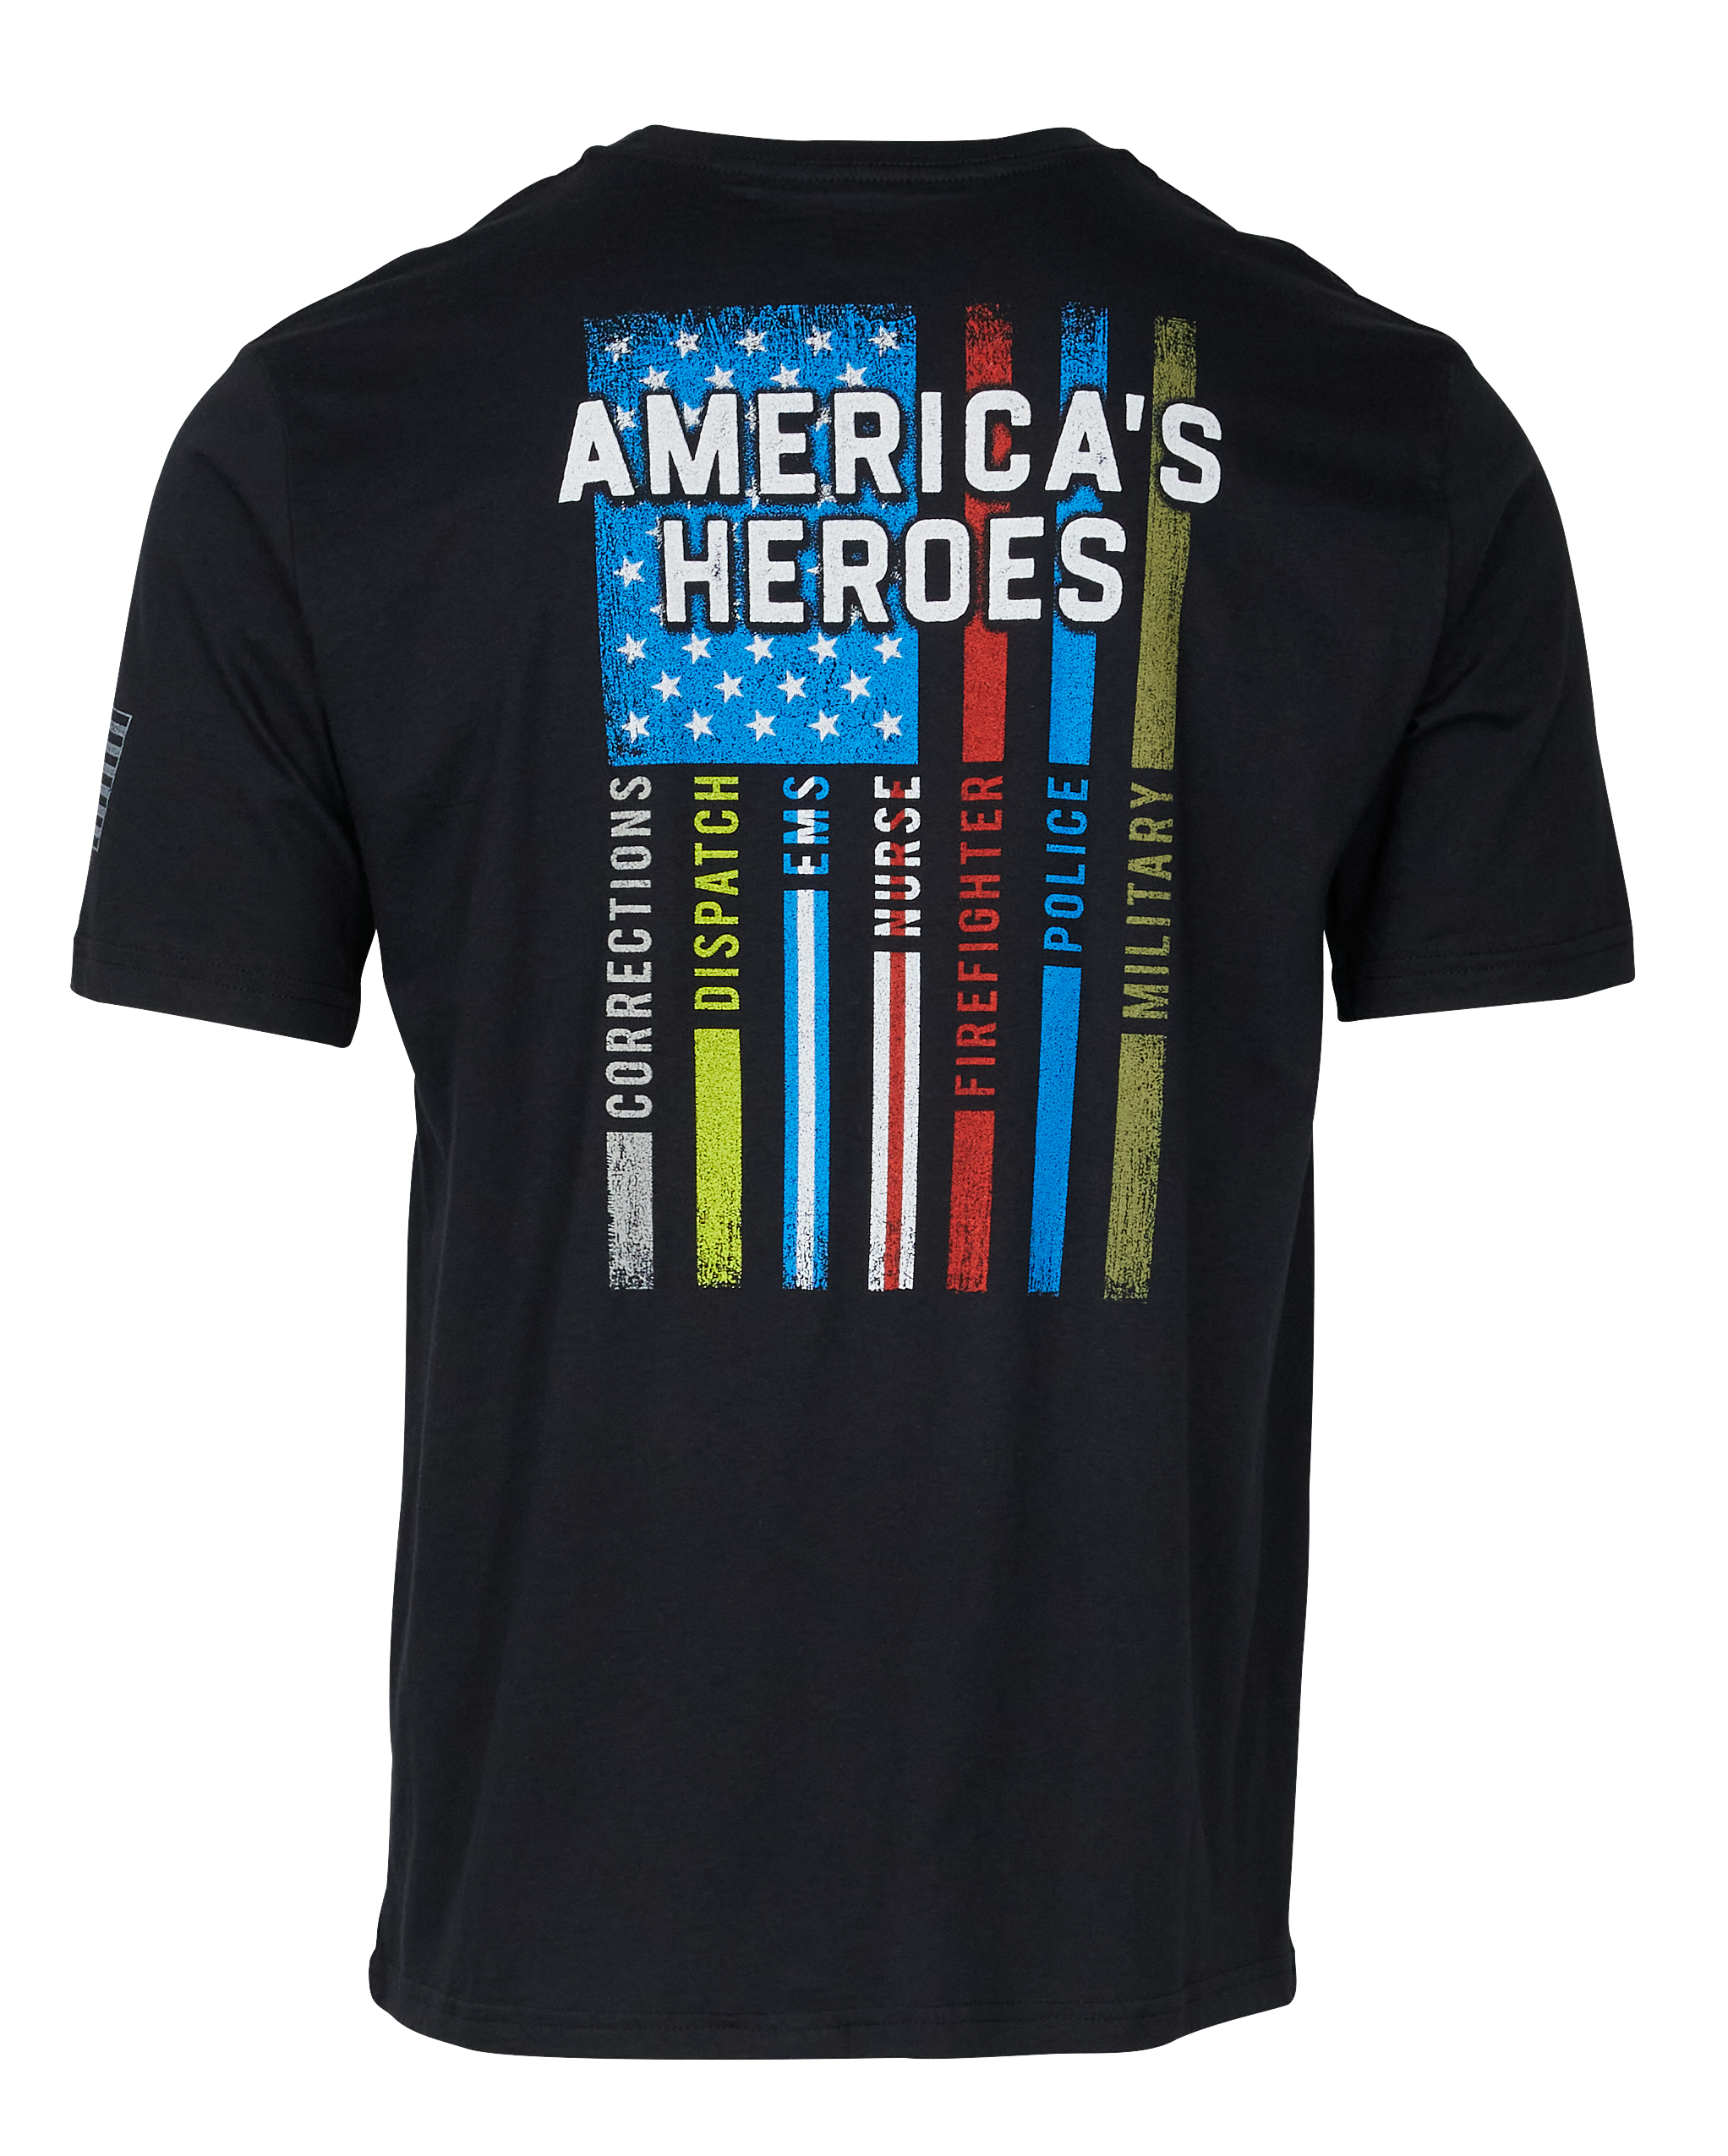 Bass Pro Shops America's Heroes Short-Sleeve T-Shirt for Men - Black - 2XL